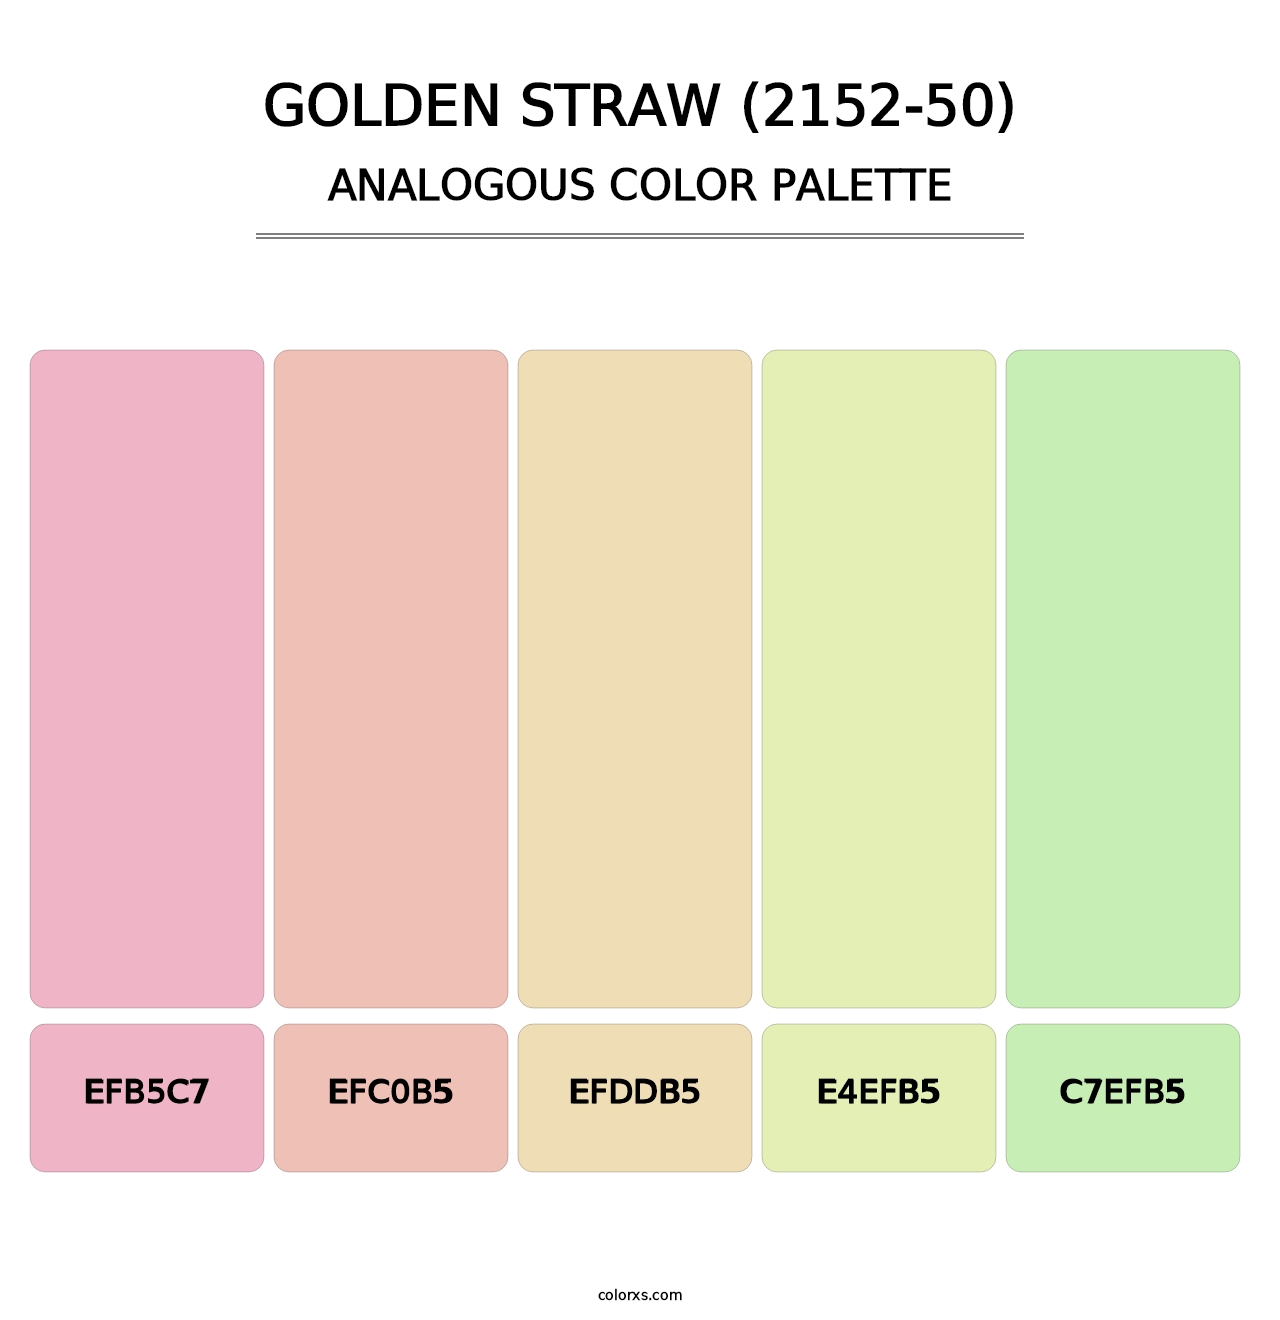 Golden Straw (2152-50) - Analogous Color Palette